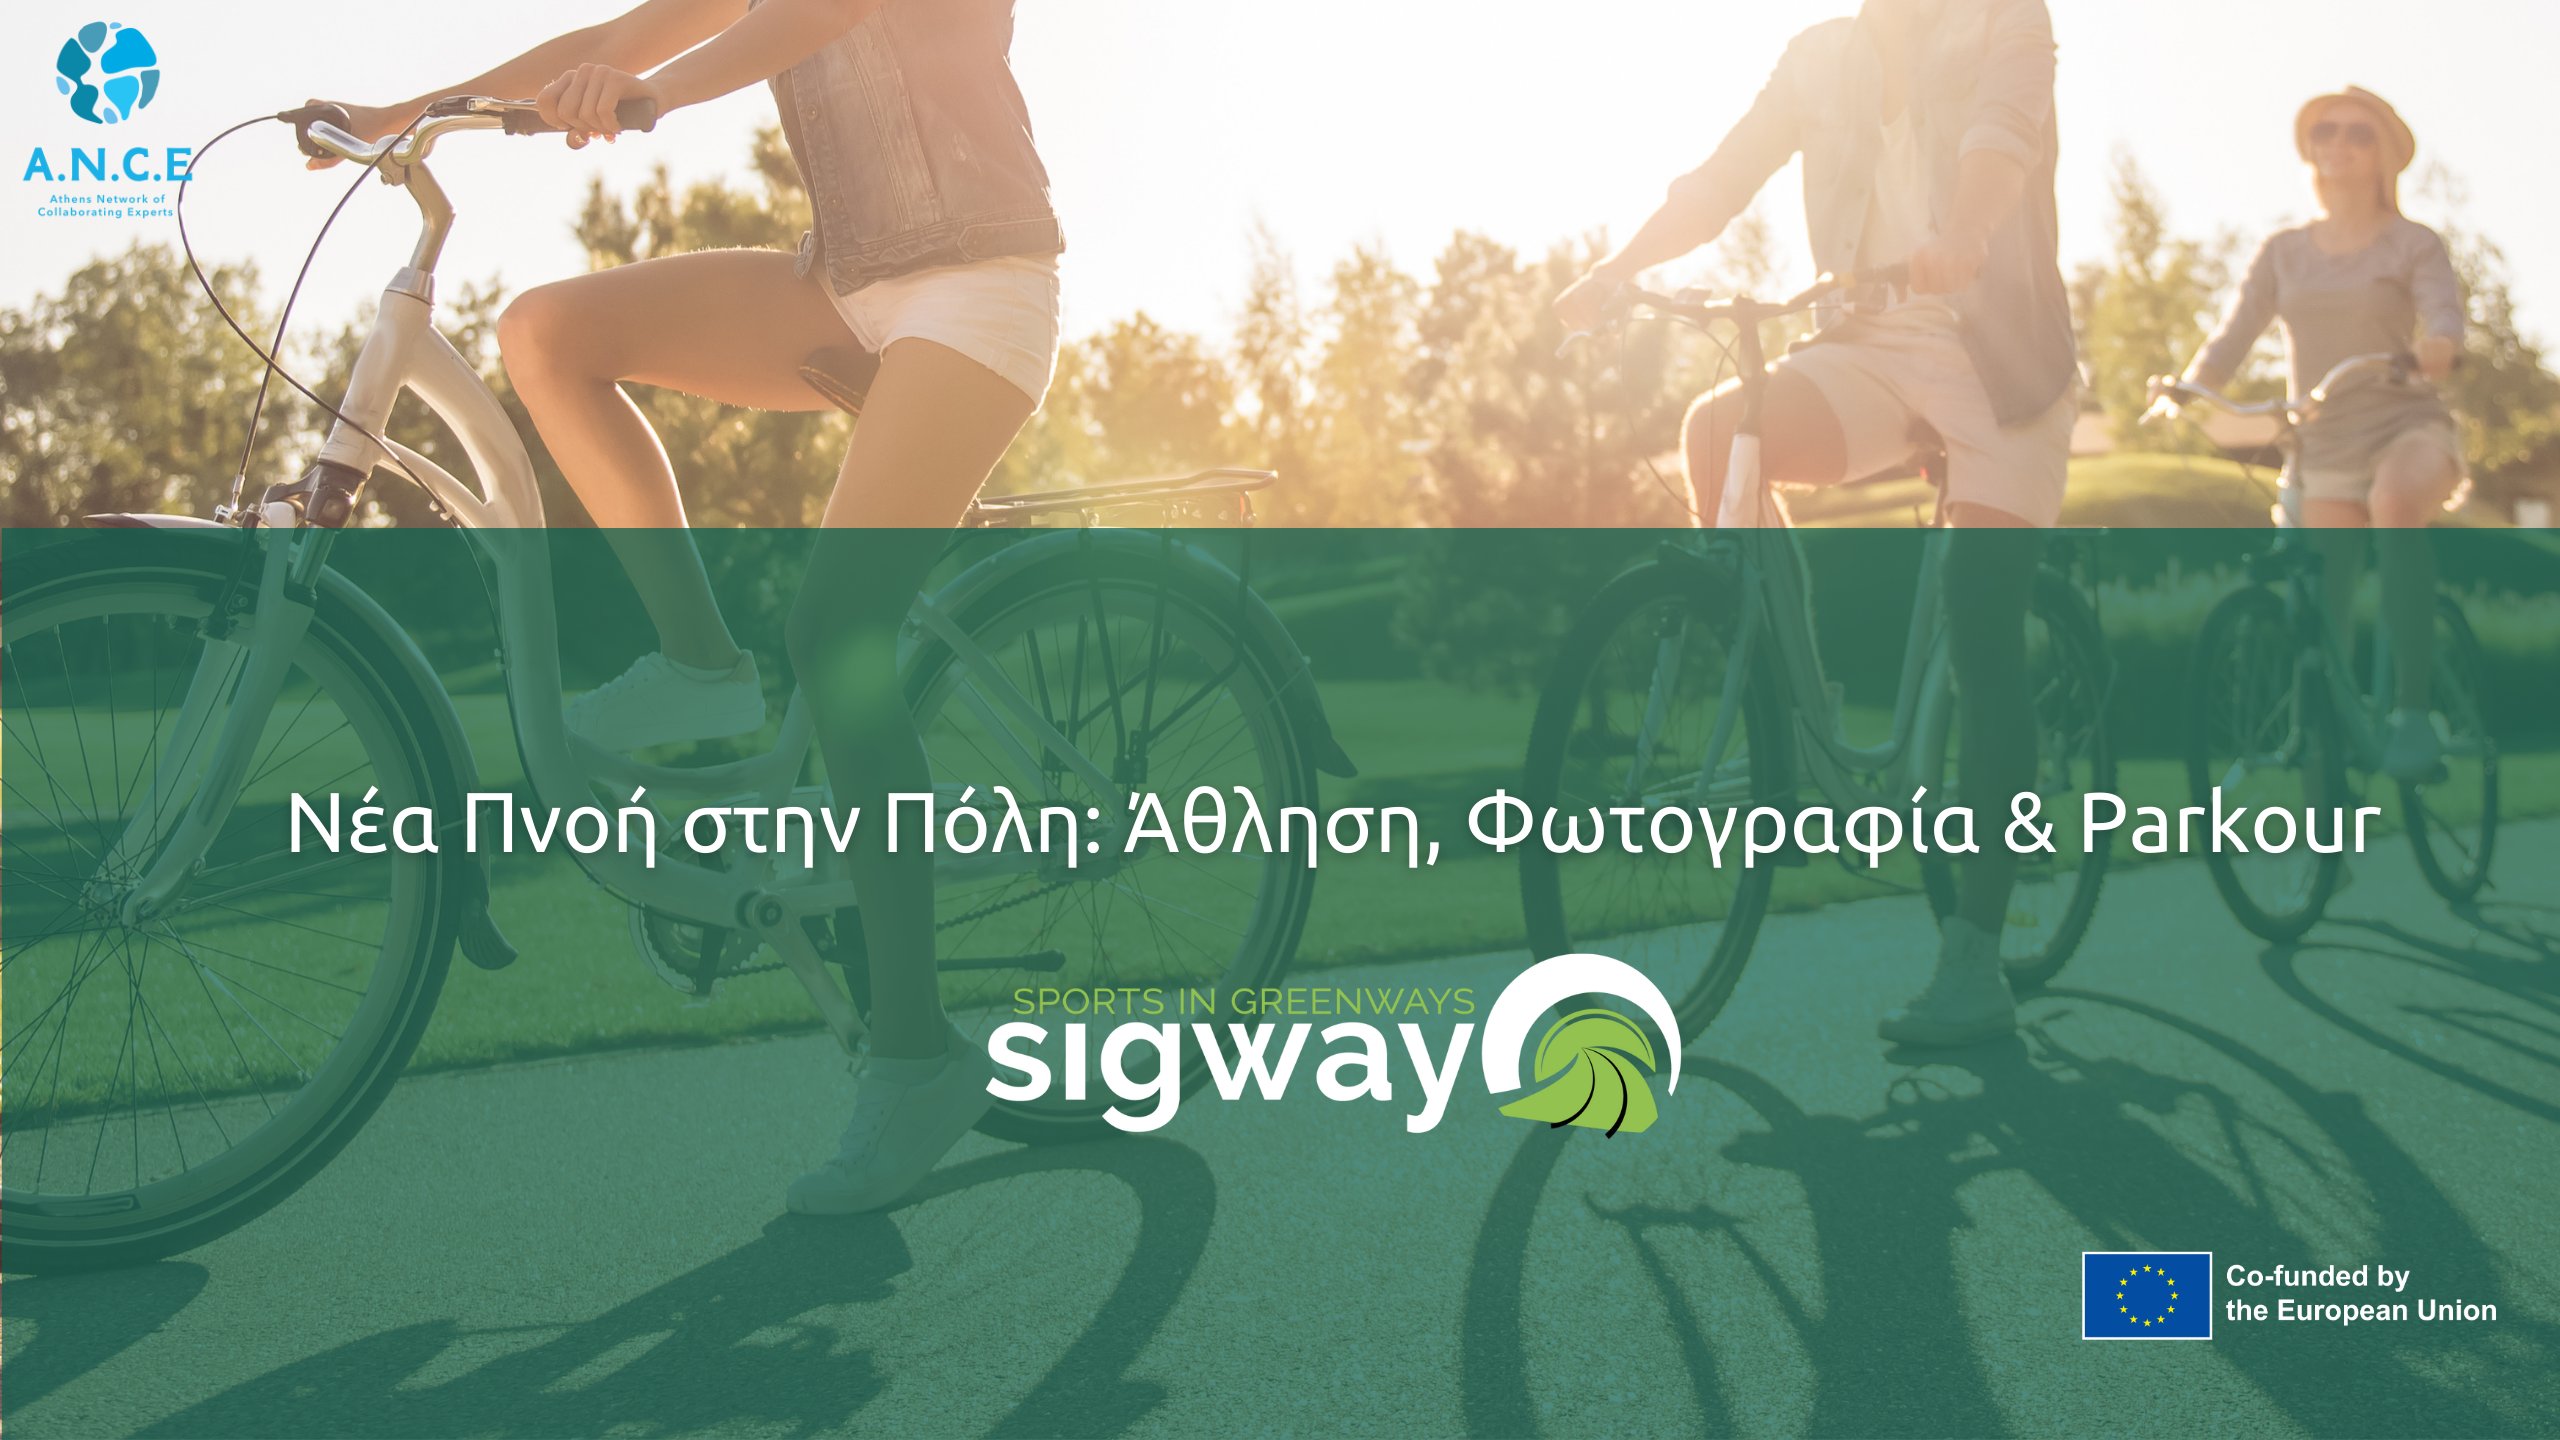 Sigway Project | Νέα Πνοή στην Πόλη: Άθληση, Φωτογραφία & Parkour